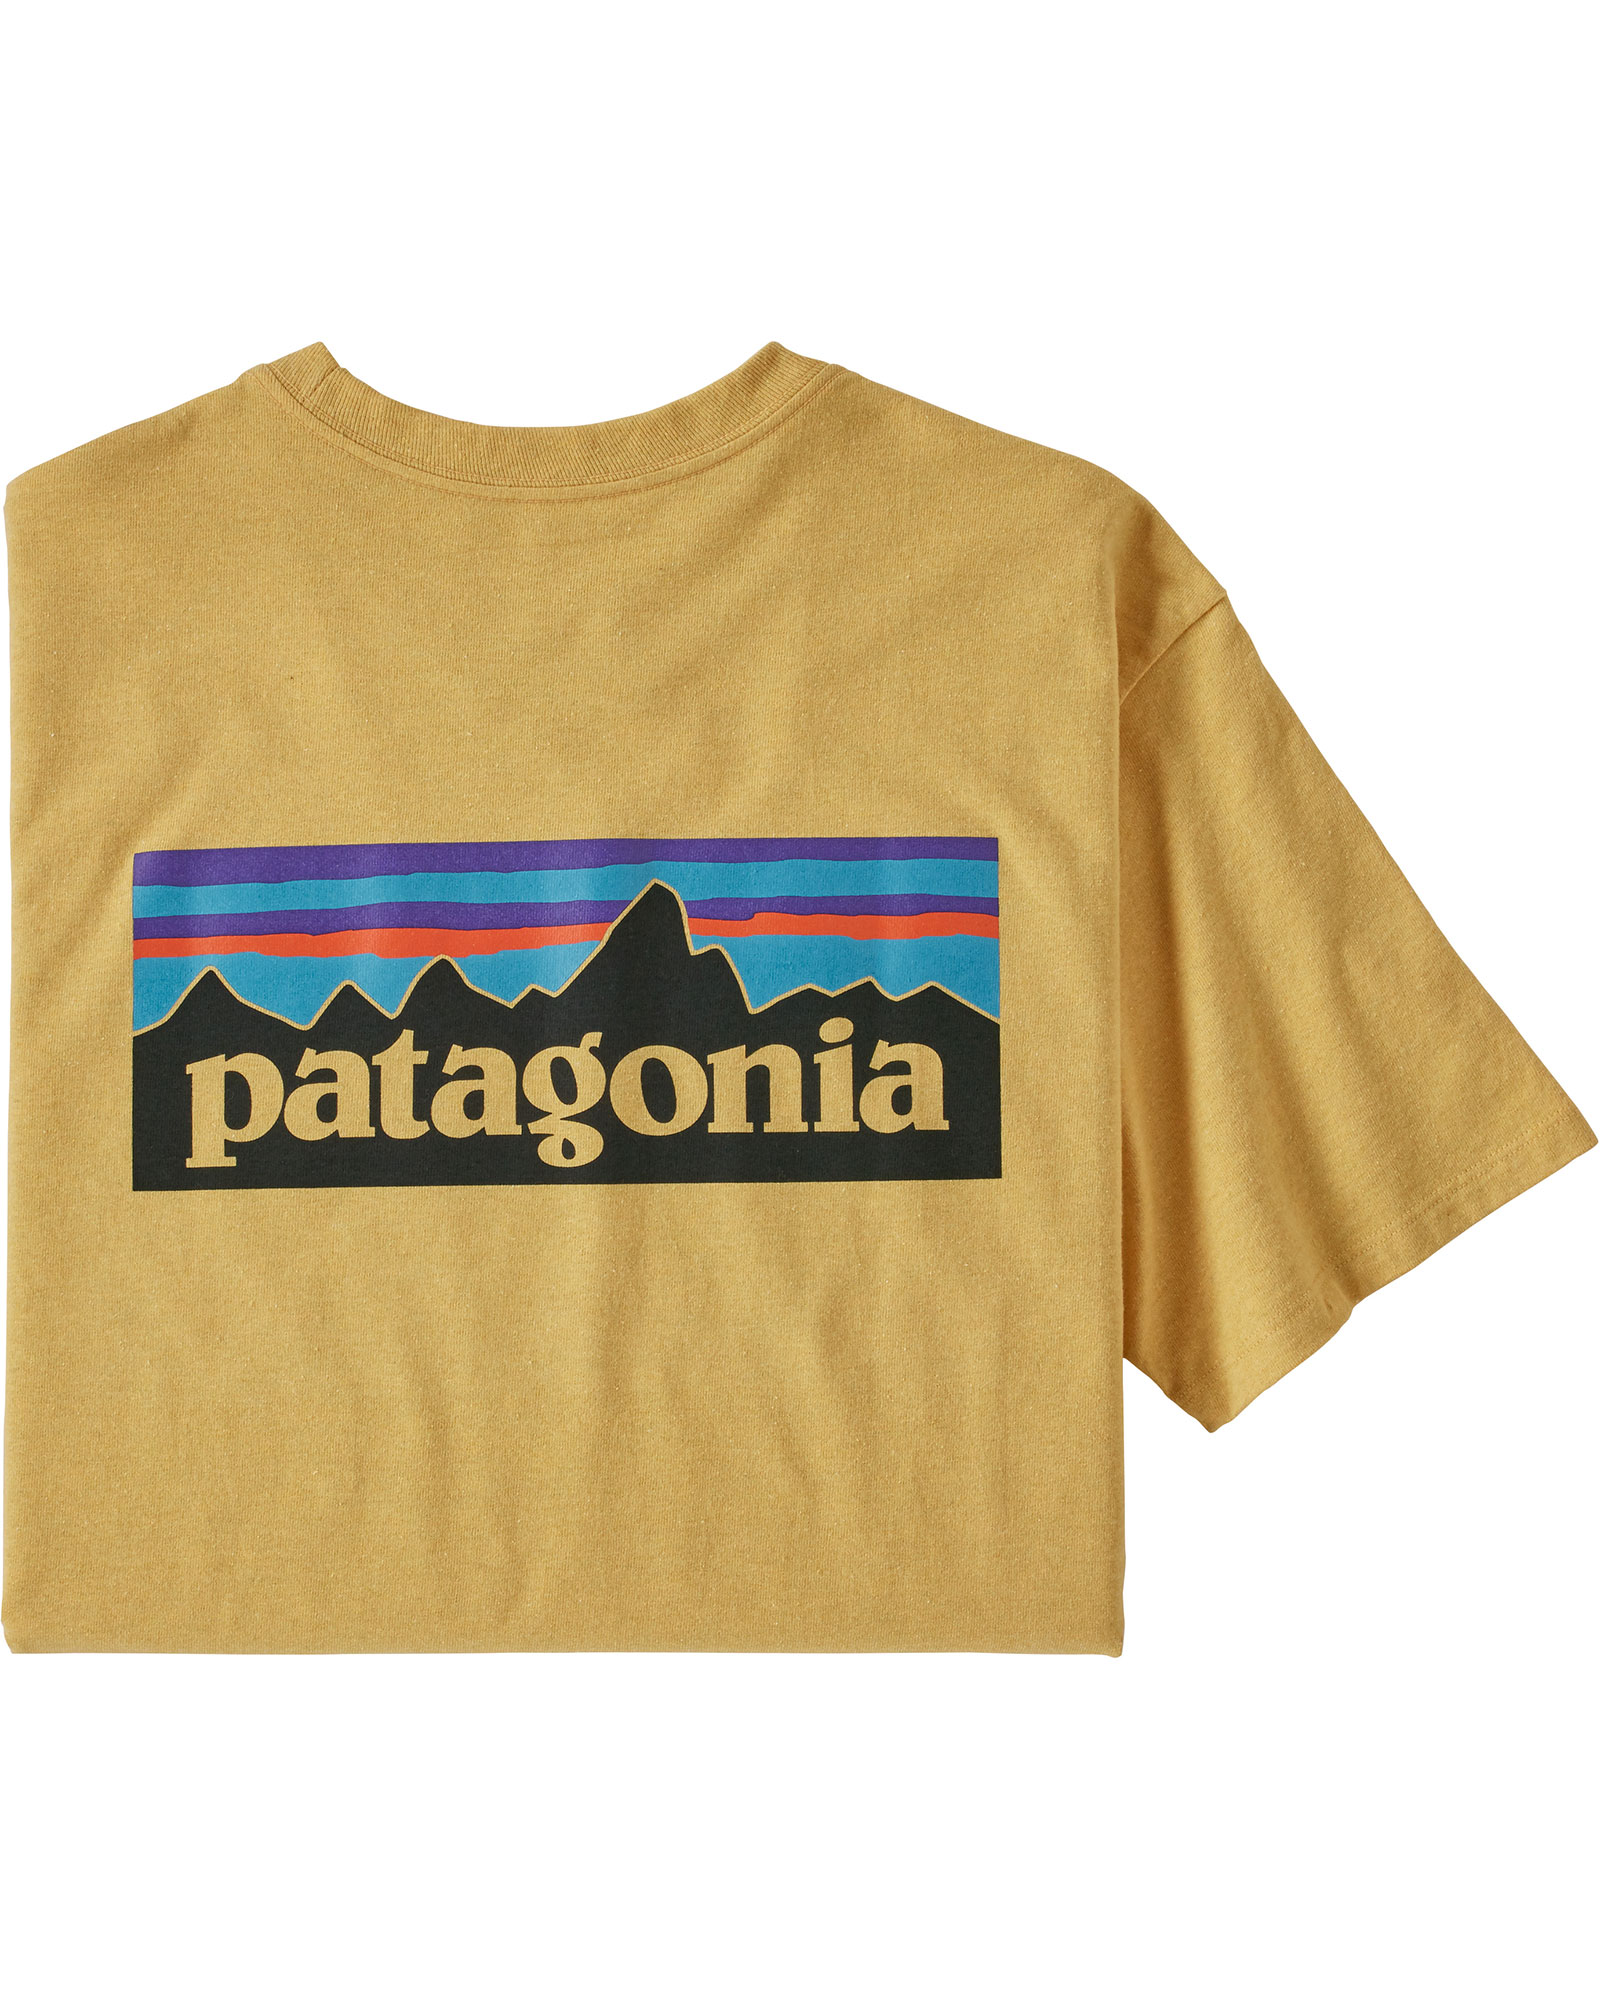 Patagonia P6 Logo Men’s Responsibili Tee - Surfboard Yellow M